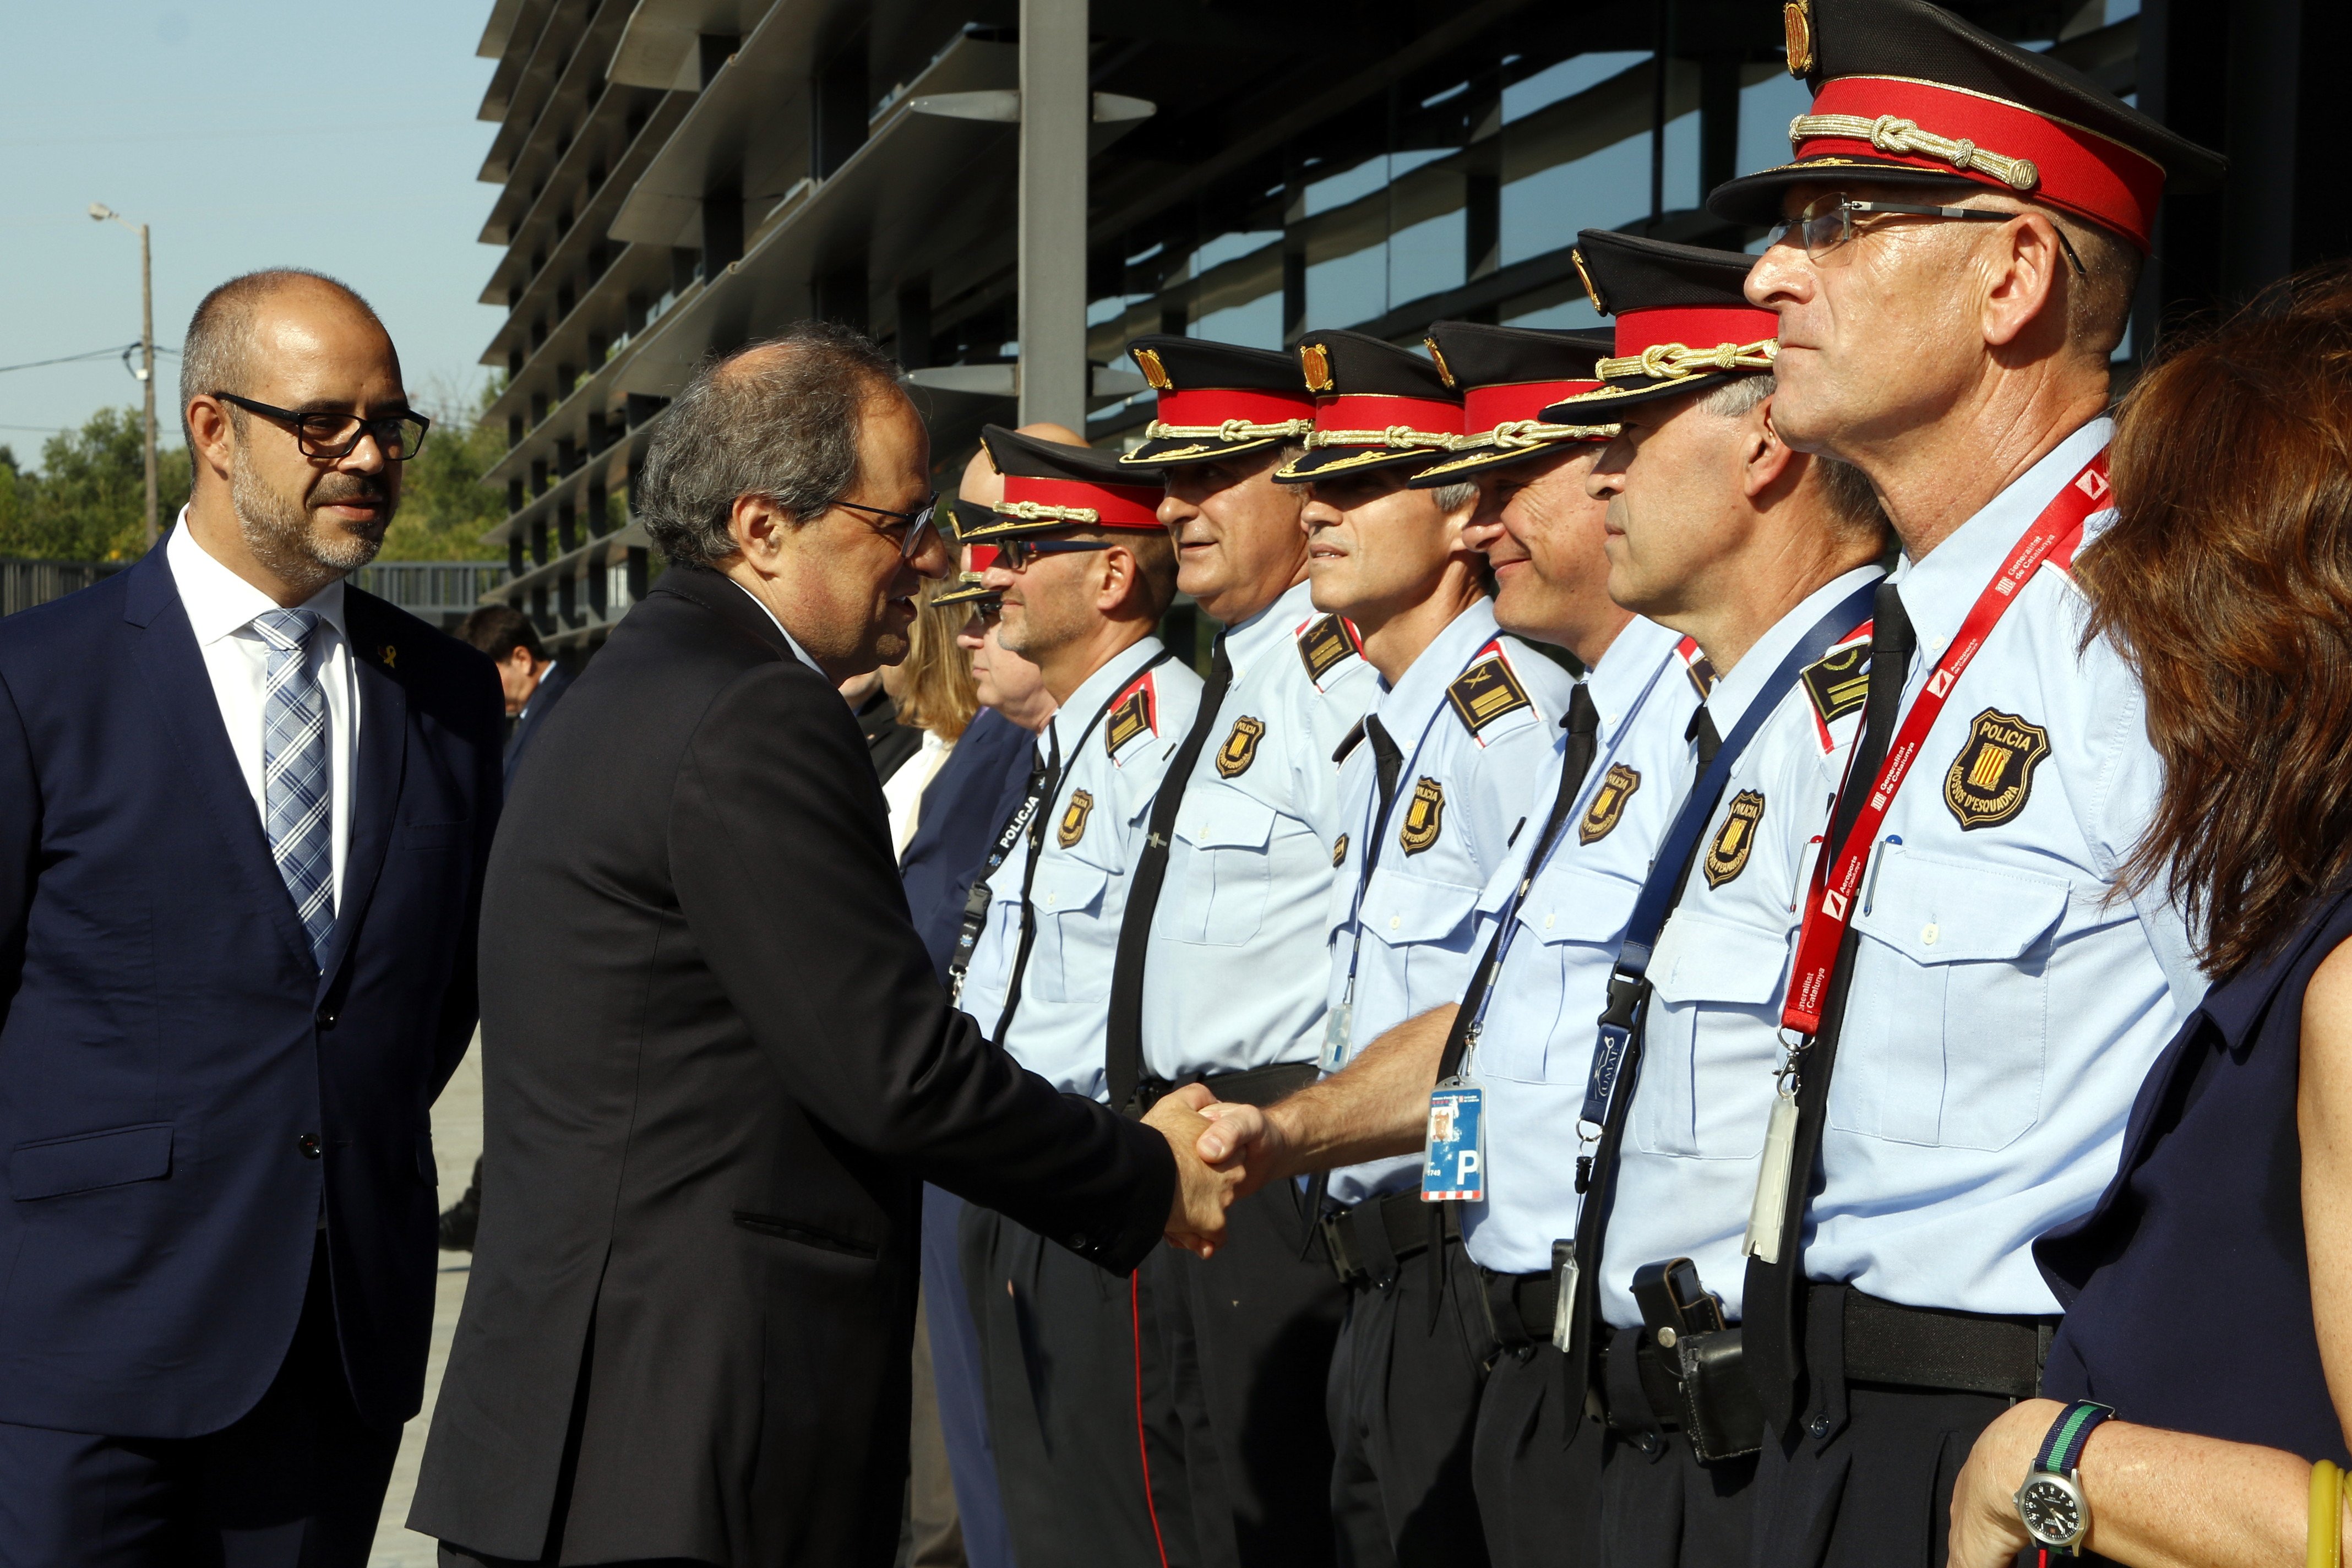 El Ministerio del Interior veta que la escolta de los Mossos acompañe a Torra a Bruselas